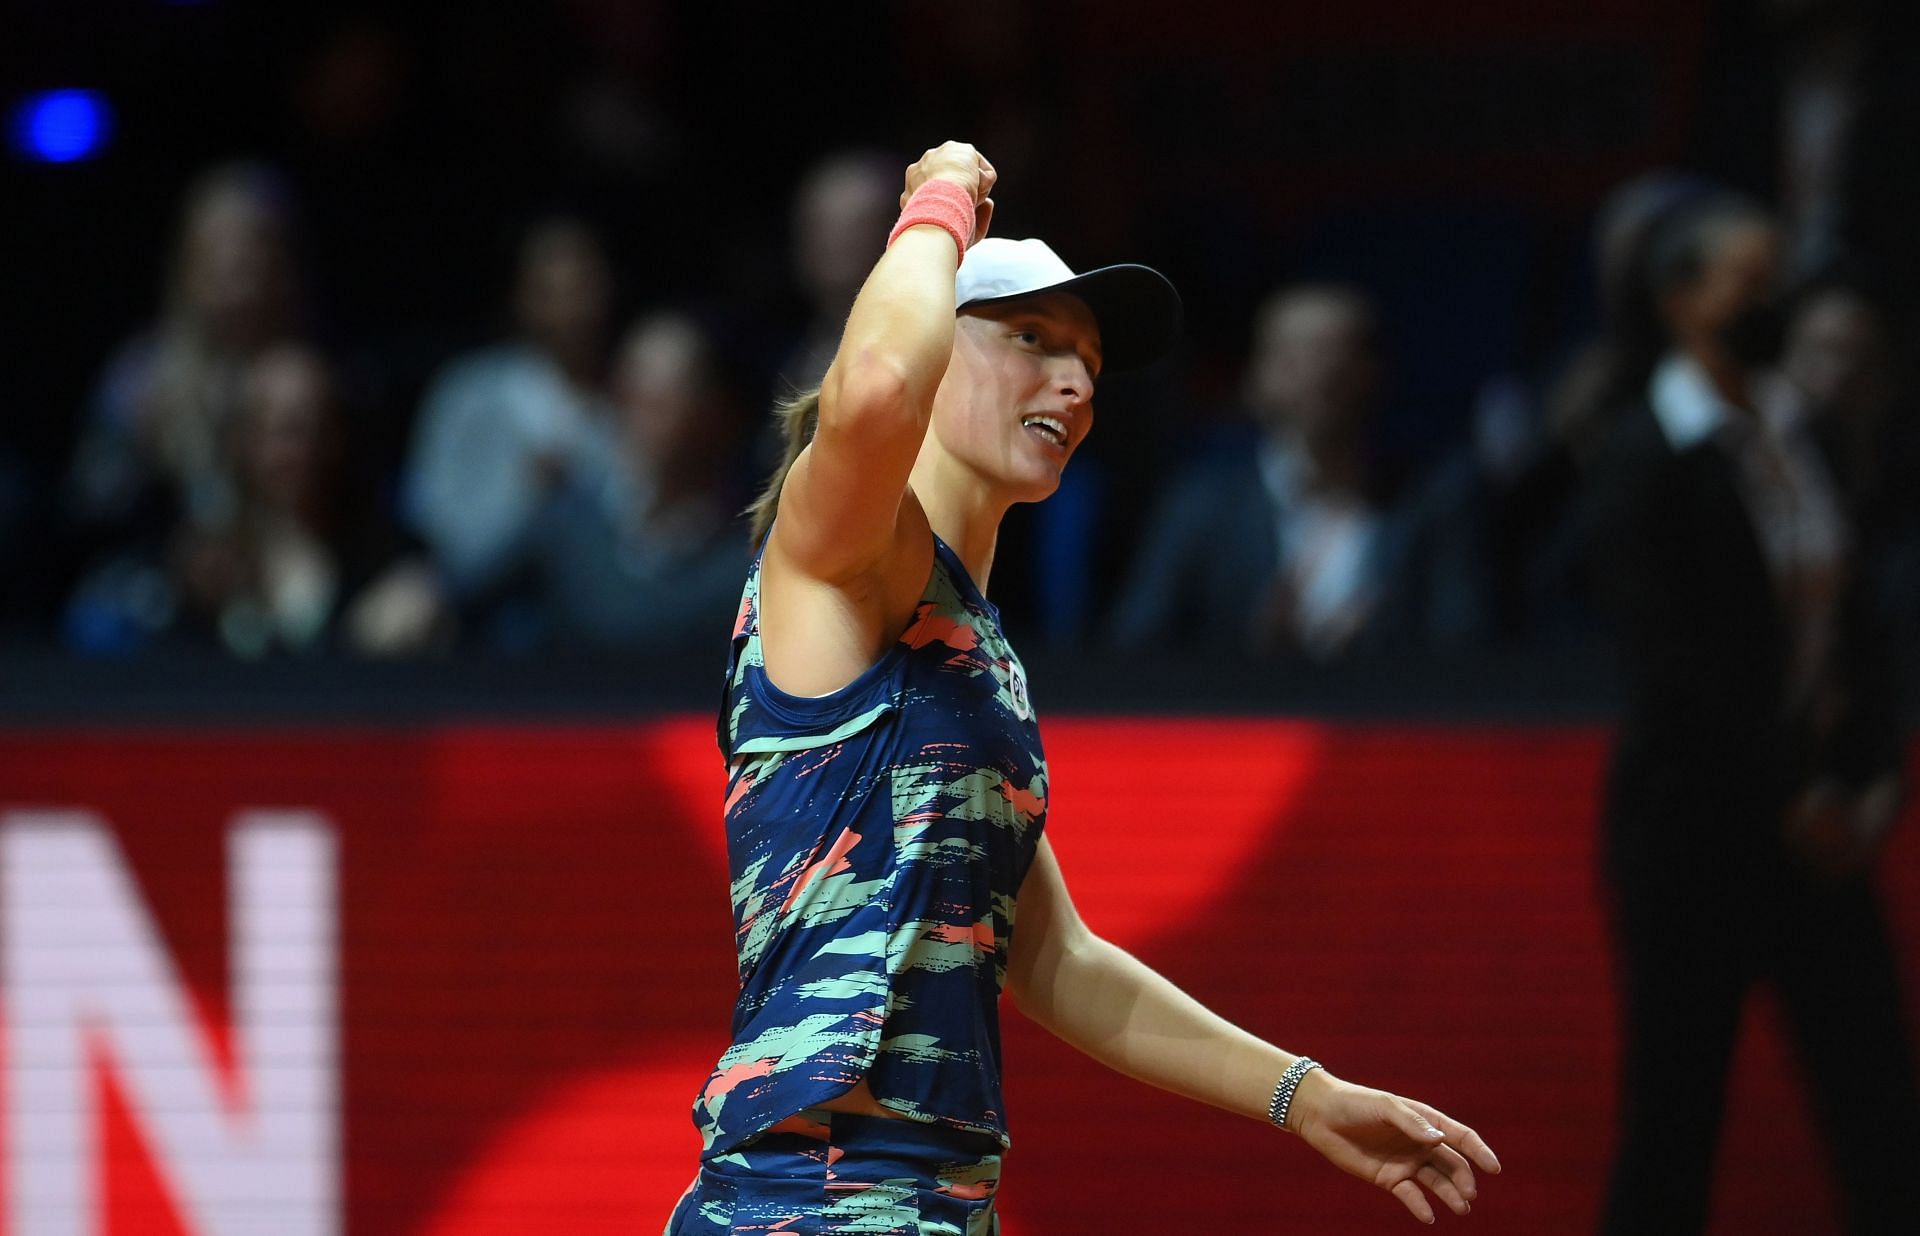 Swiatek won her fourth consecutive title this season